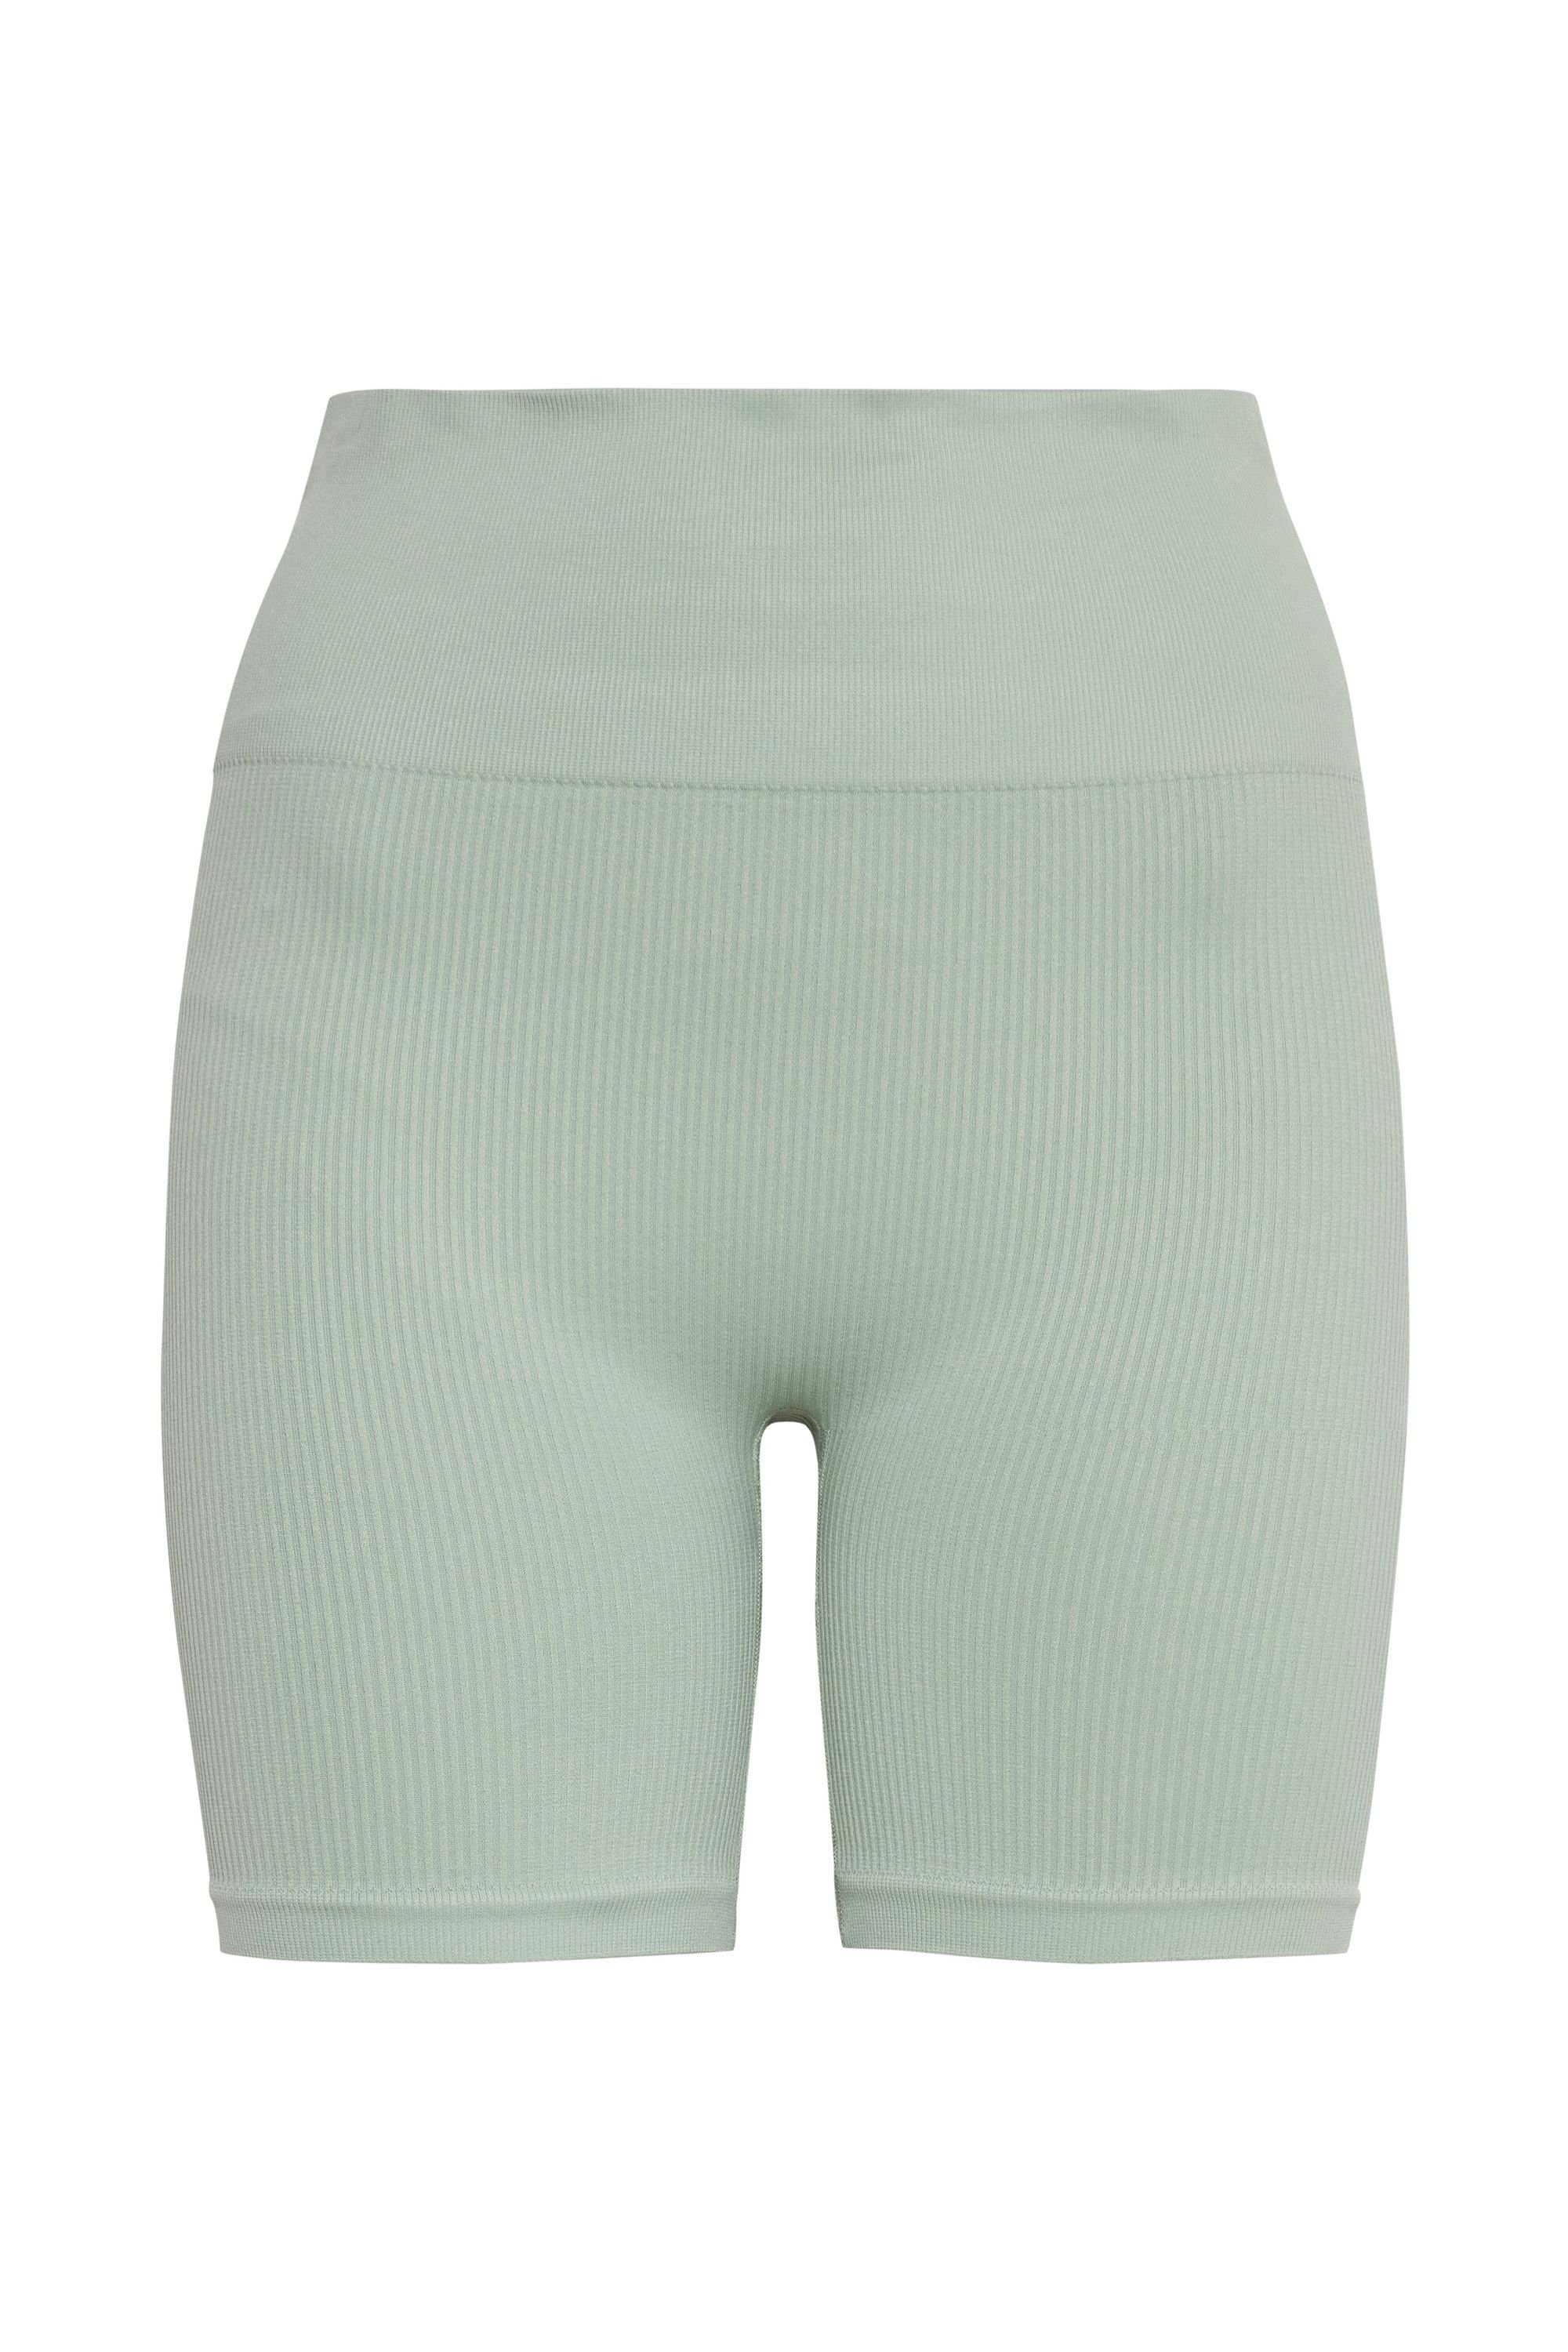 TheJoggConcept. Radlerhose JCSAHANA SHORTS - Green sportliche 22800028 Tight-Shorts (155706) Frosty